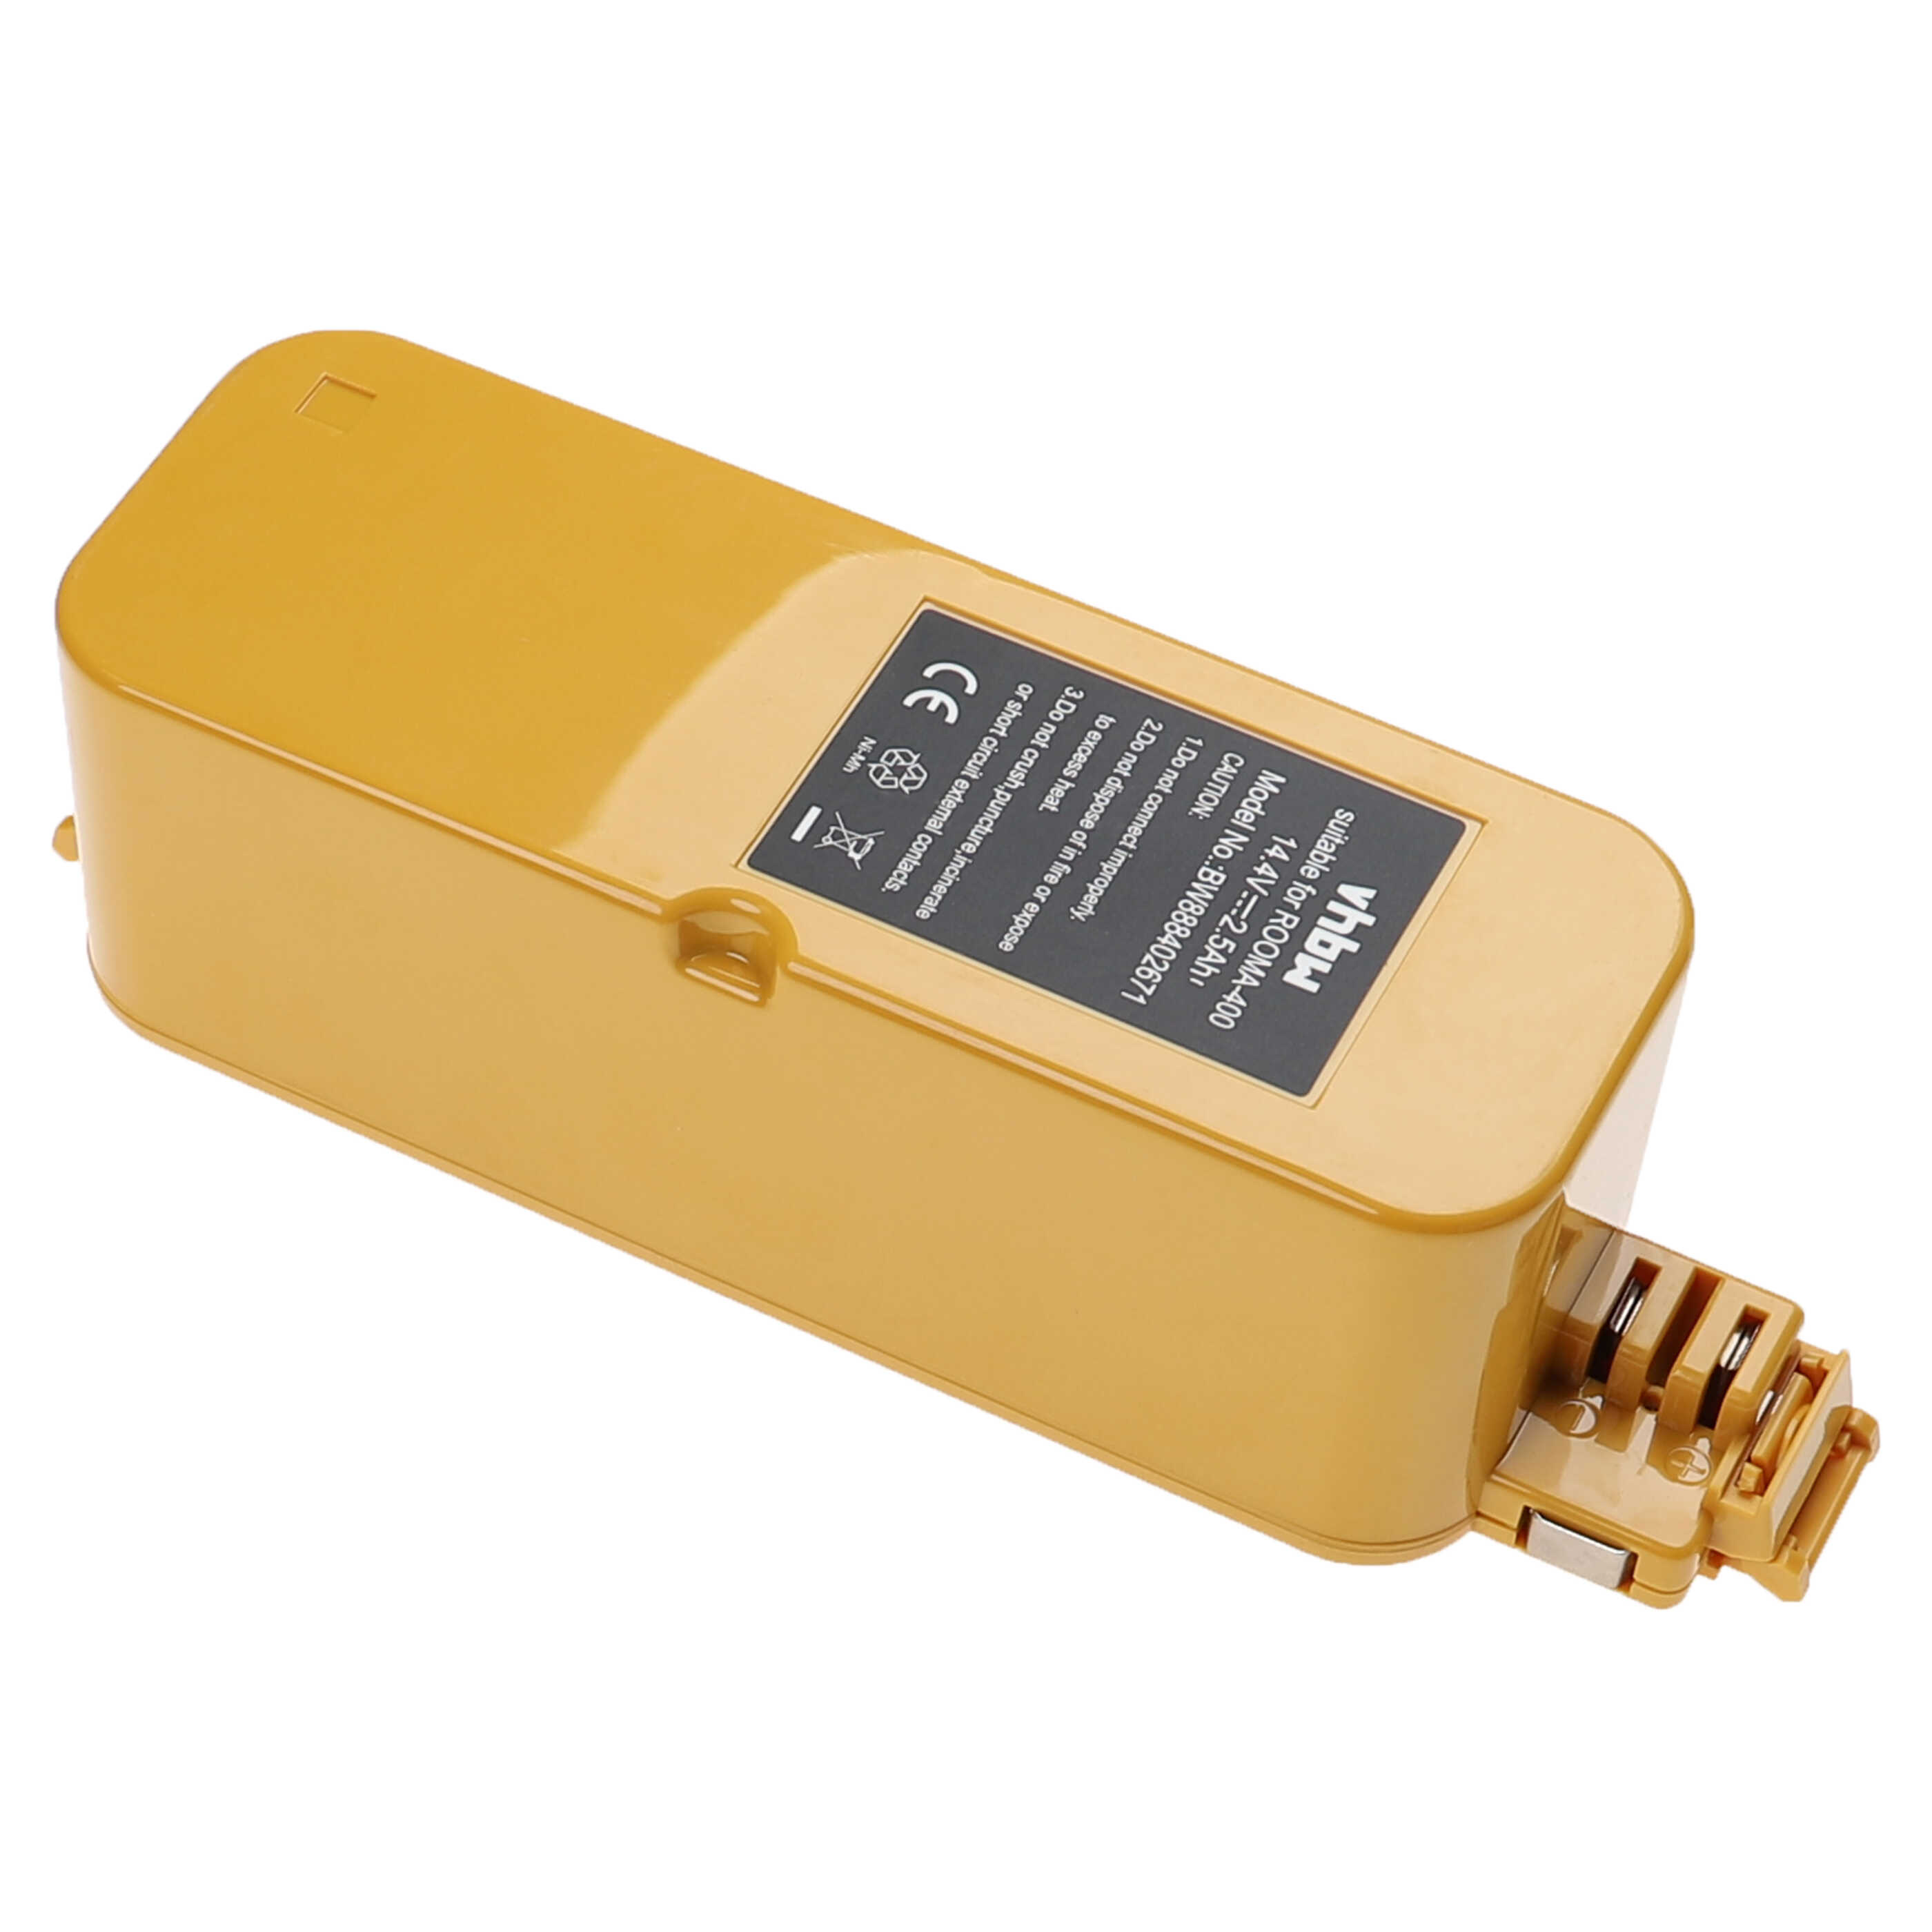 Akumulator do robota zamiennik 17373, APS 4905, NC-3493-919, 11700 - 2500 mAh 14,4 V NiMH, żółty